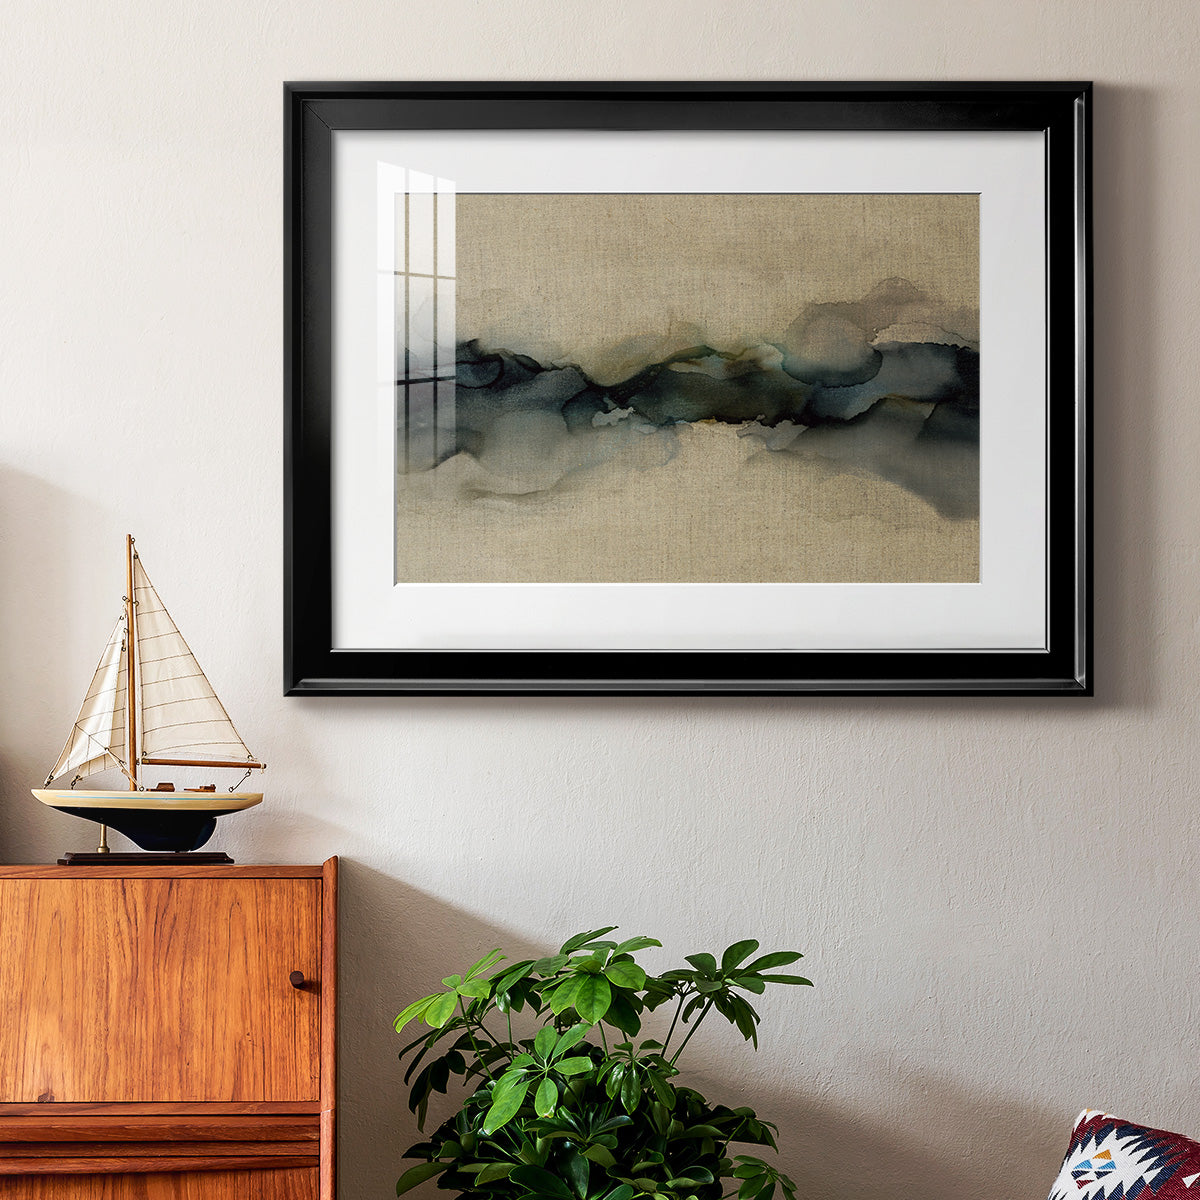 Ocean Streams Premium Framed Print - Ready to Hang